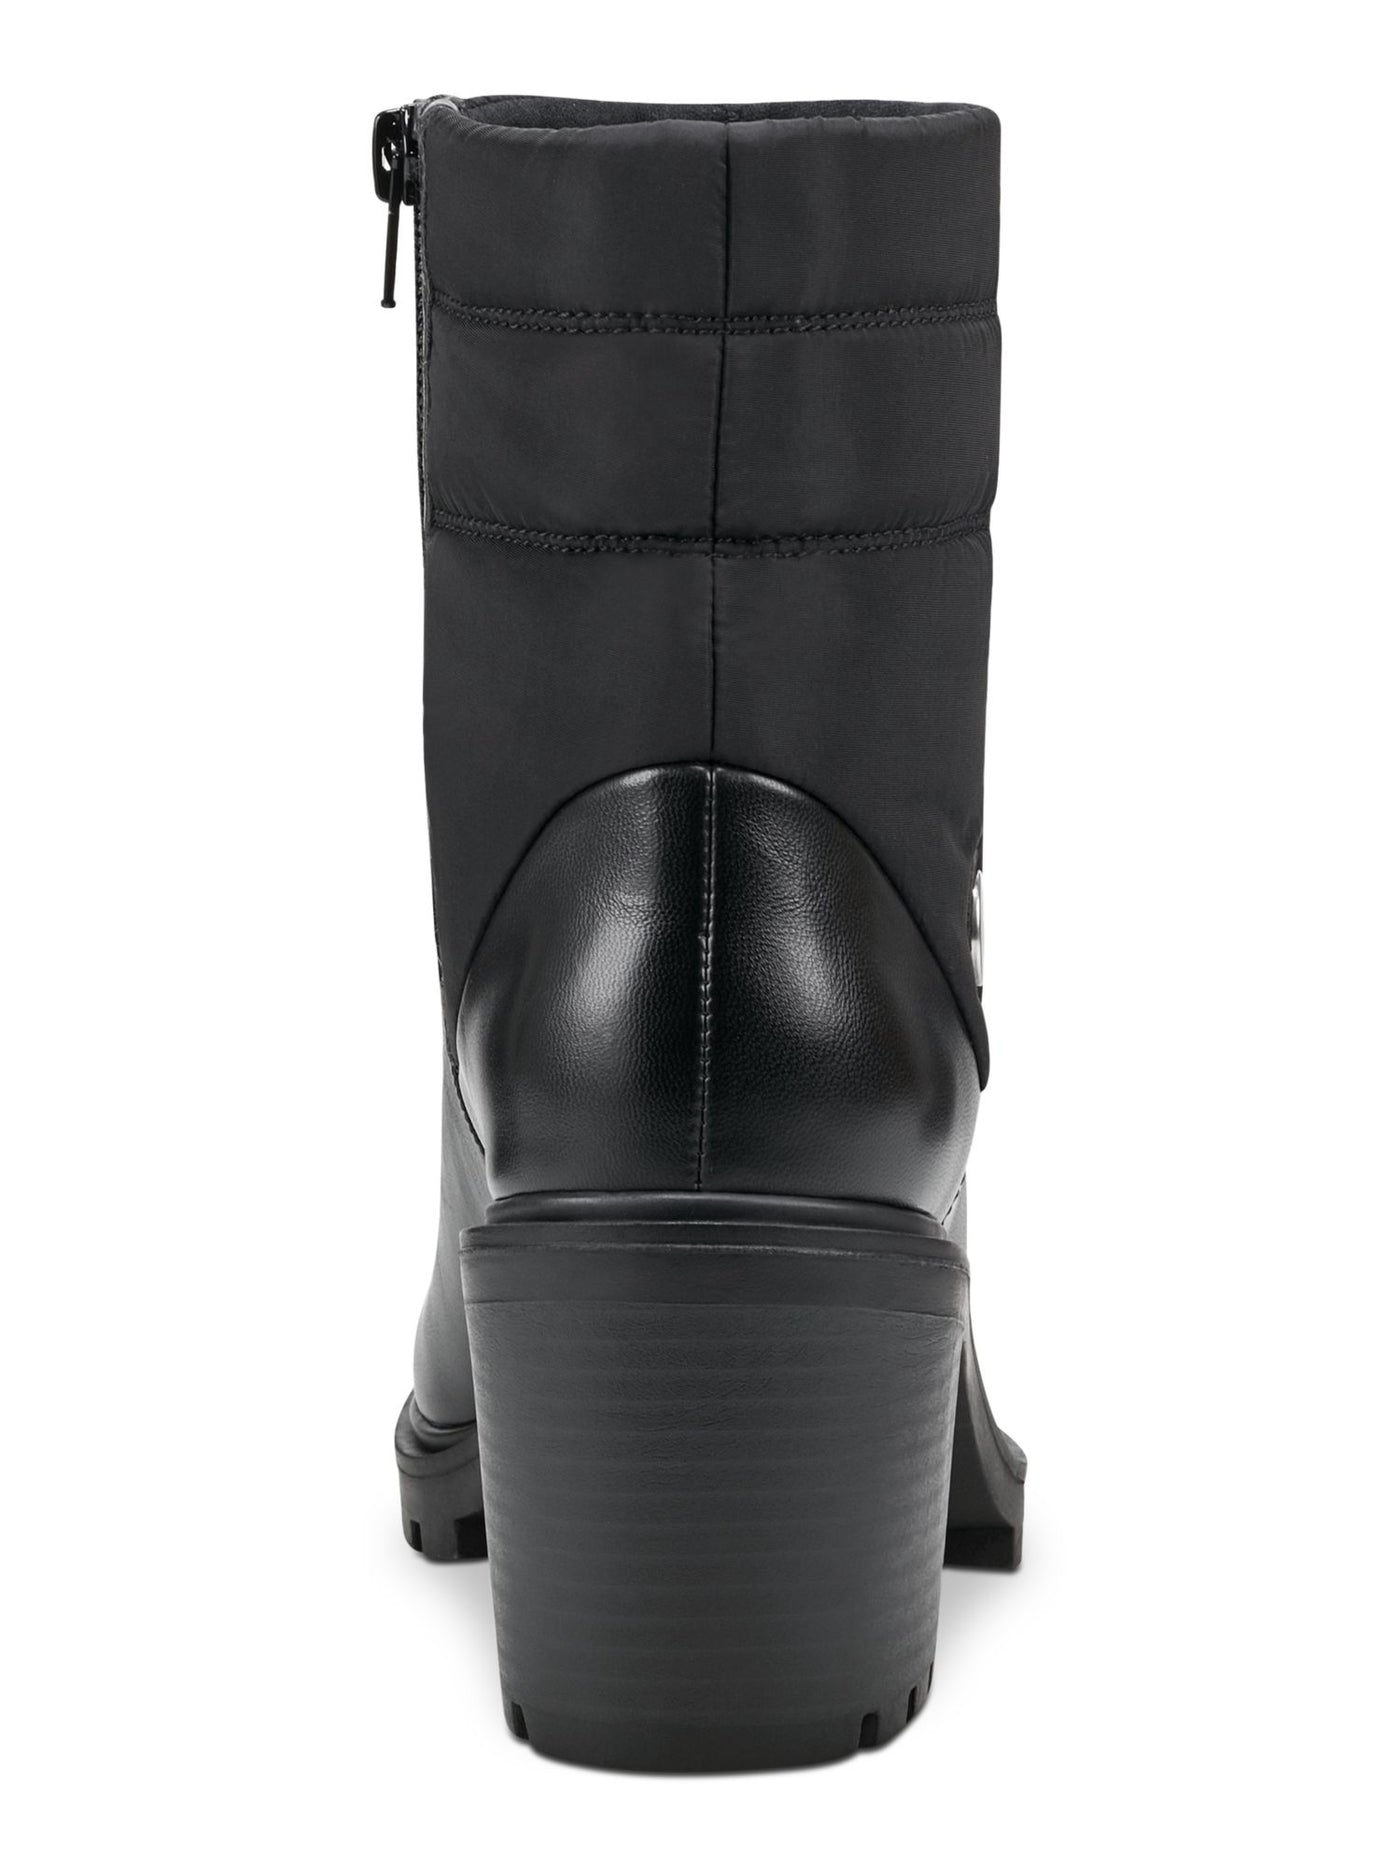 ALFANI Womens Black Puffer Lug Sole Padded Belcalise Almond Toe Block Heel Zip-Up Boots Shoes 9.5 M